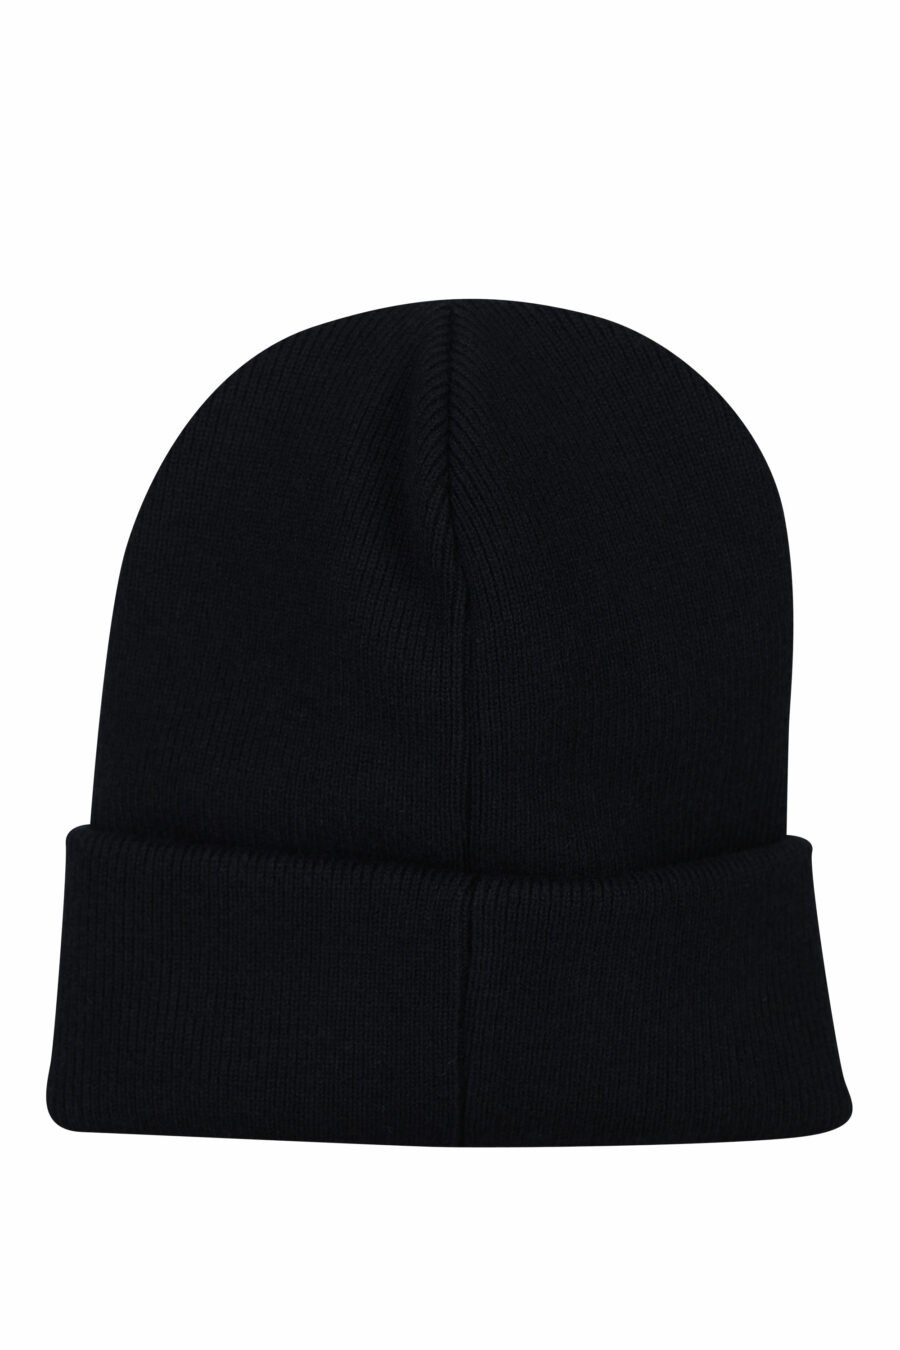 Black cap with white maxilogue - 8055777217375 1